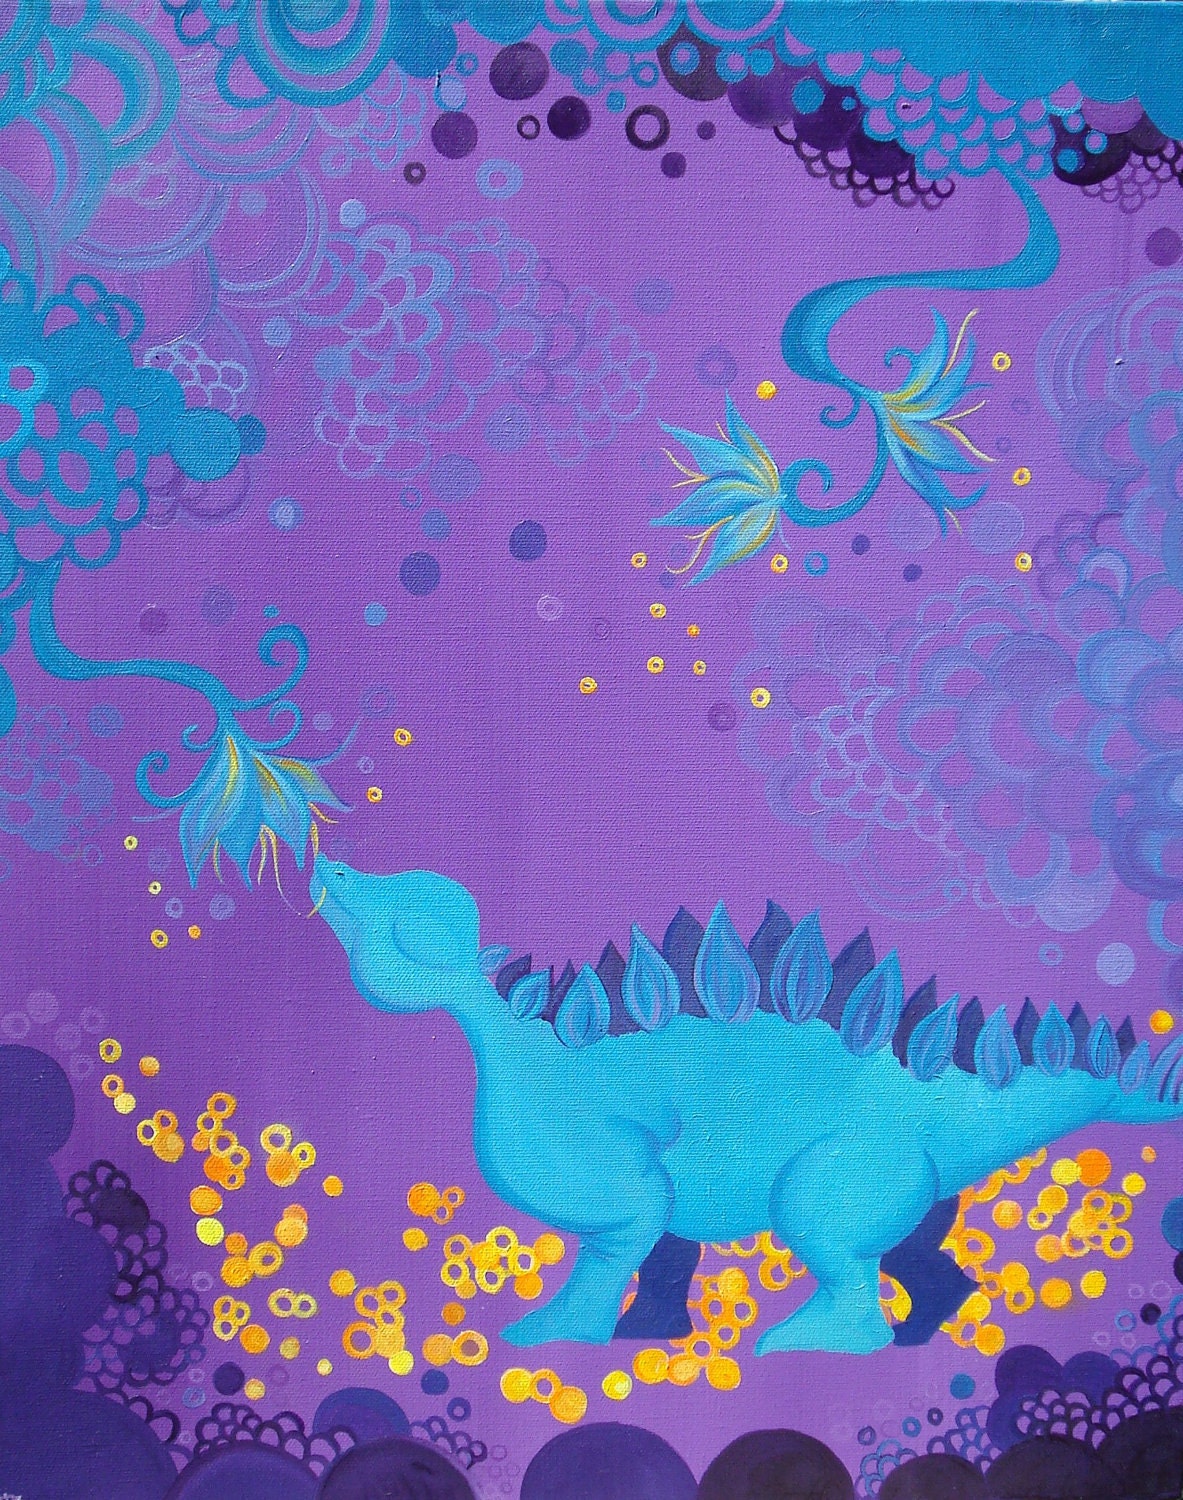 Teal Stegosaurus Original Oil Painting on Canvas: " Steggy Brunch"